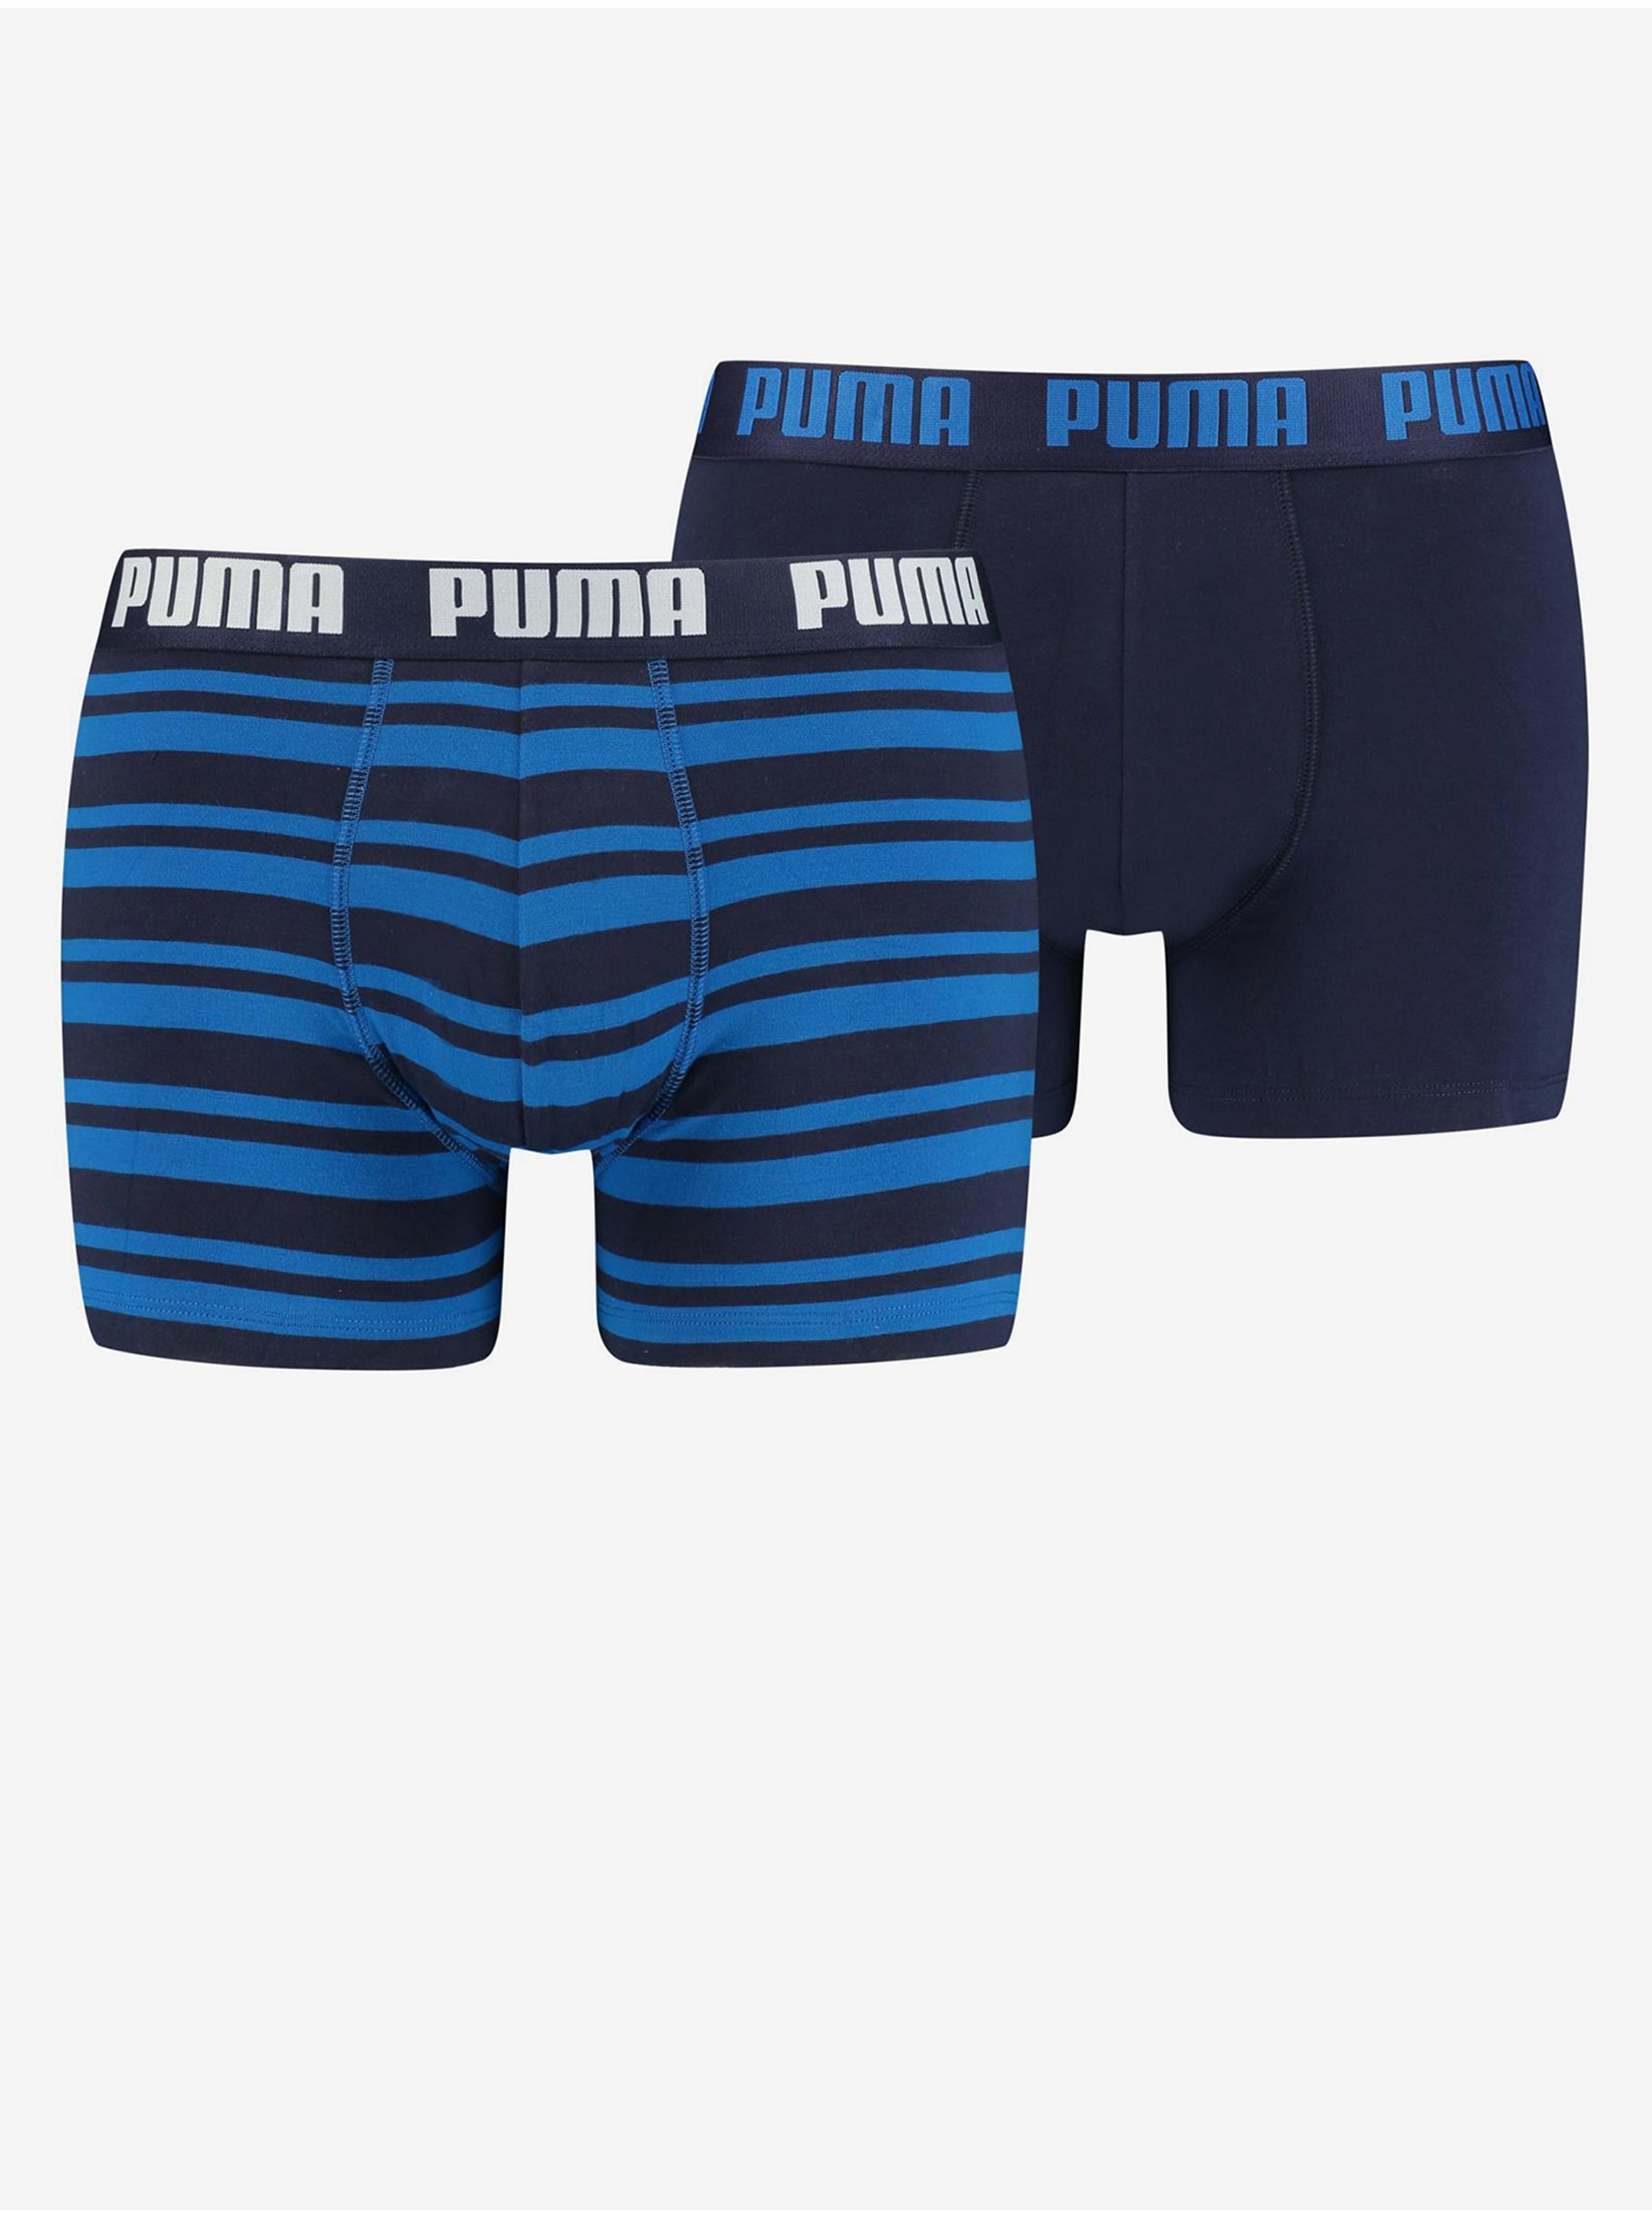 E-shop Sada dvou pánských boxerek v modré a tmavě modré barvě Puma